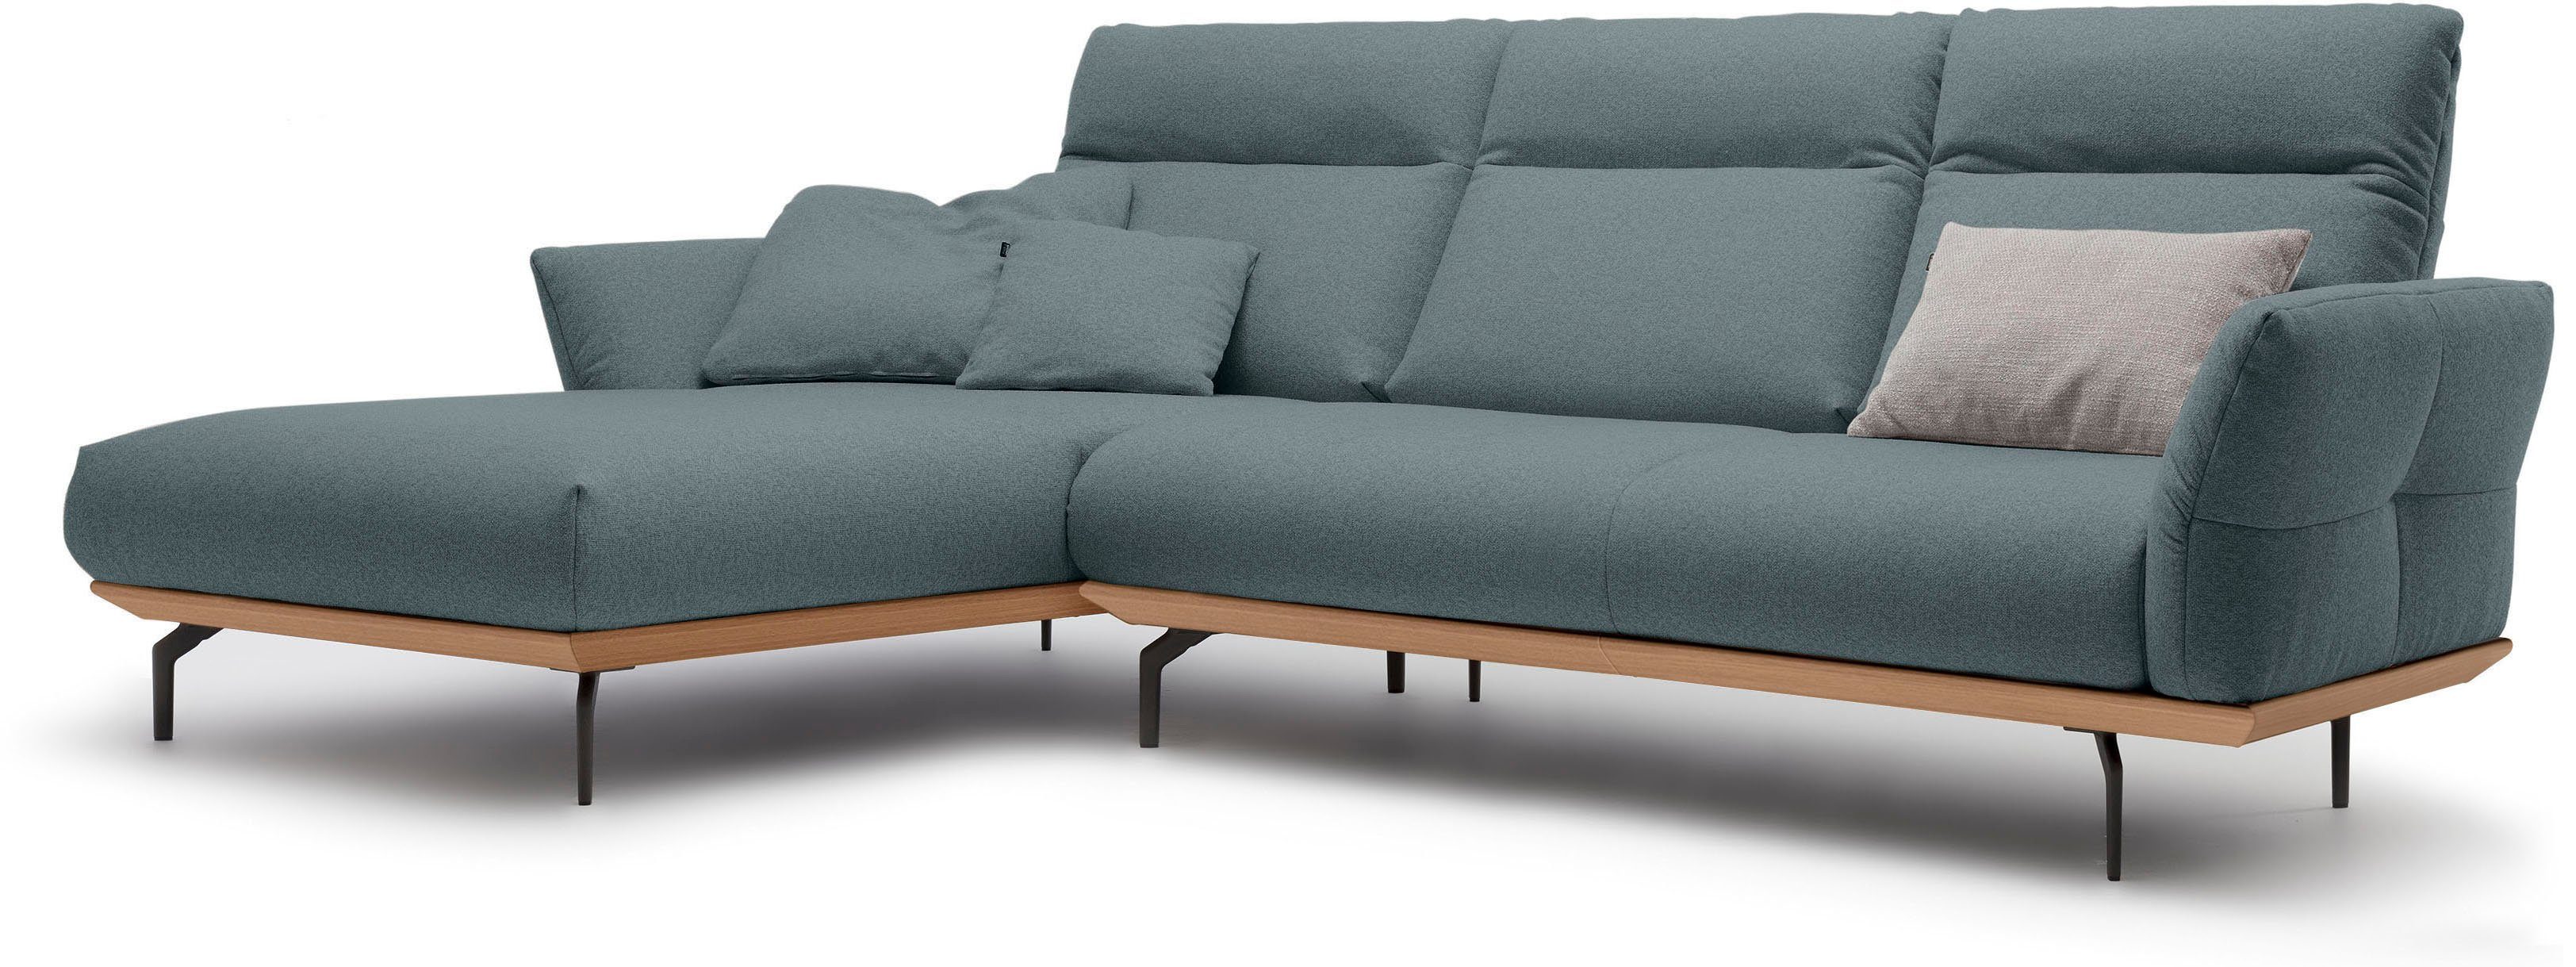 hs.460, cm Alugussfüße umbragrau, Ecksofa sofa in Breite Eiche, hülsta Sockel in 298